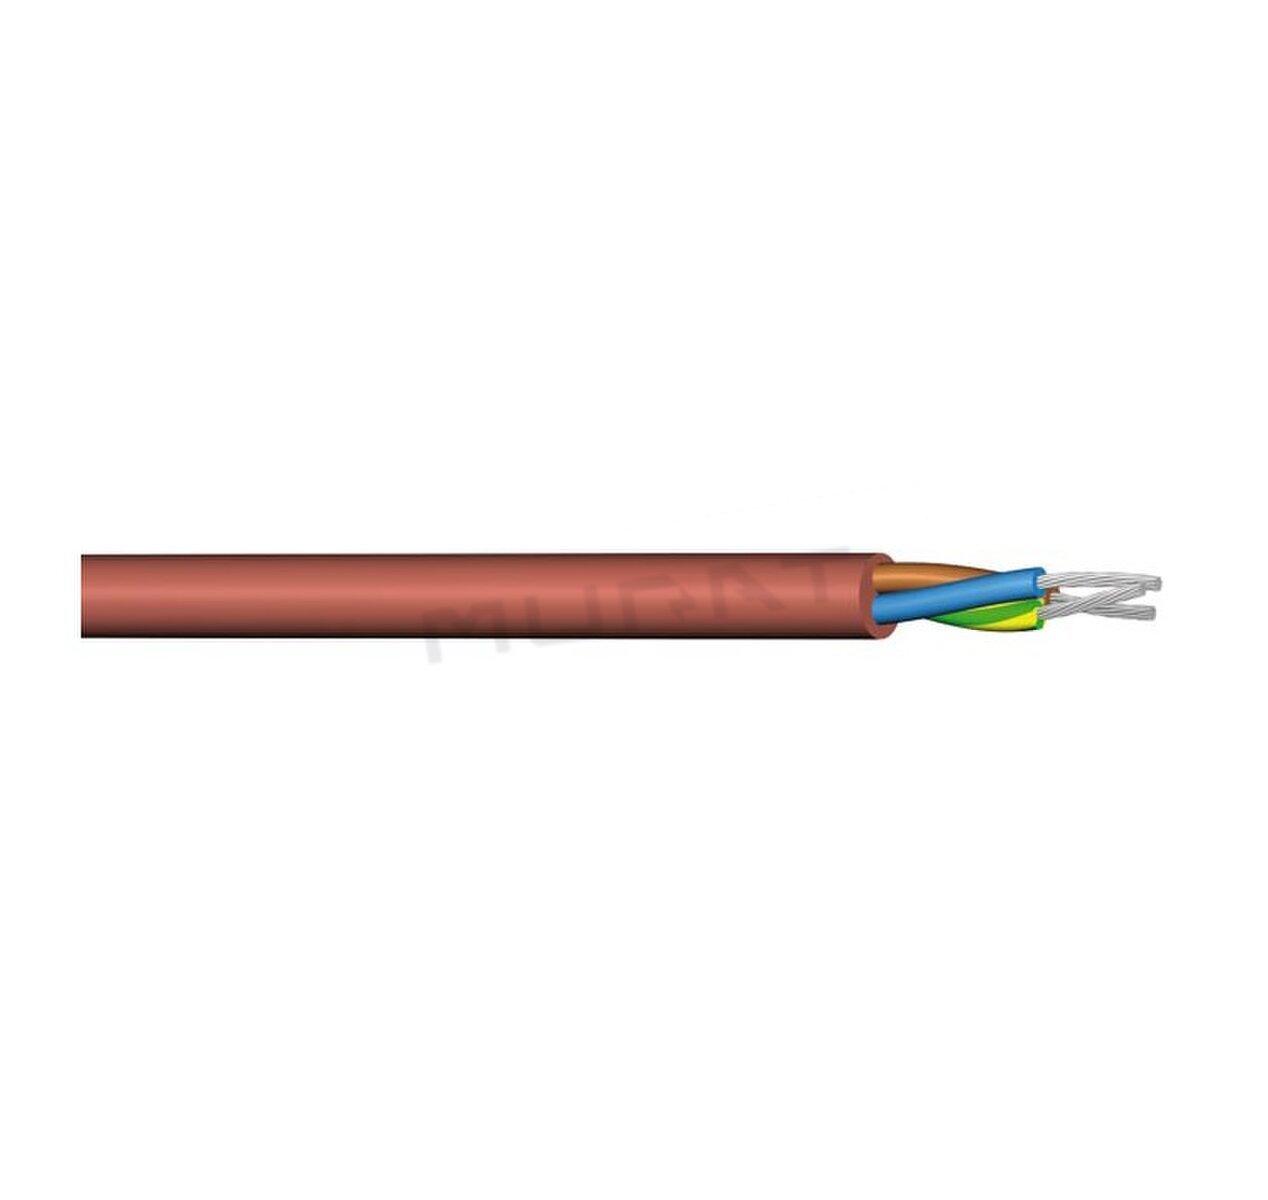 Kábel SIHF-J 4x1,5 mm2